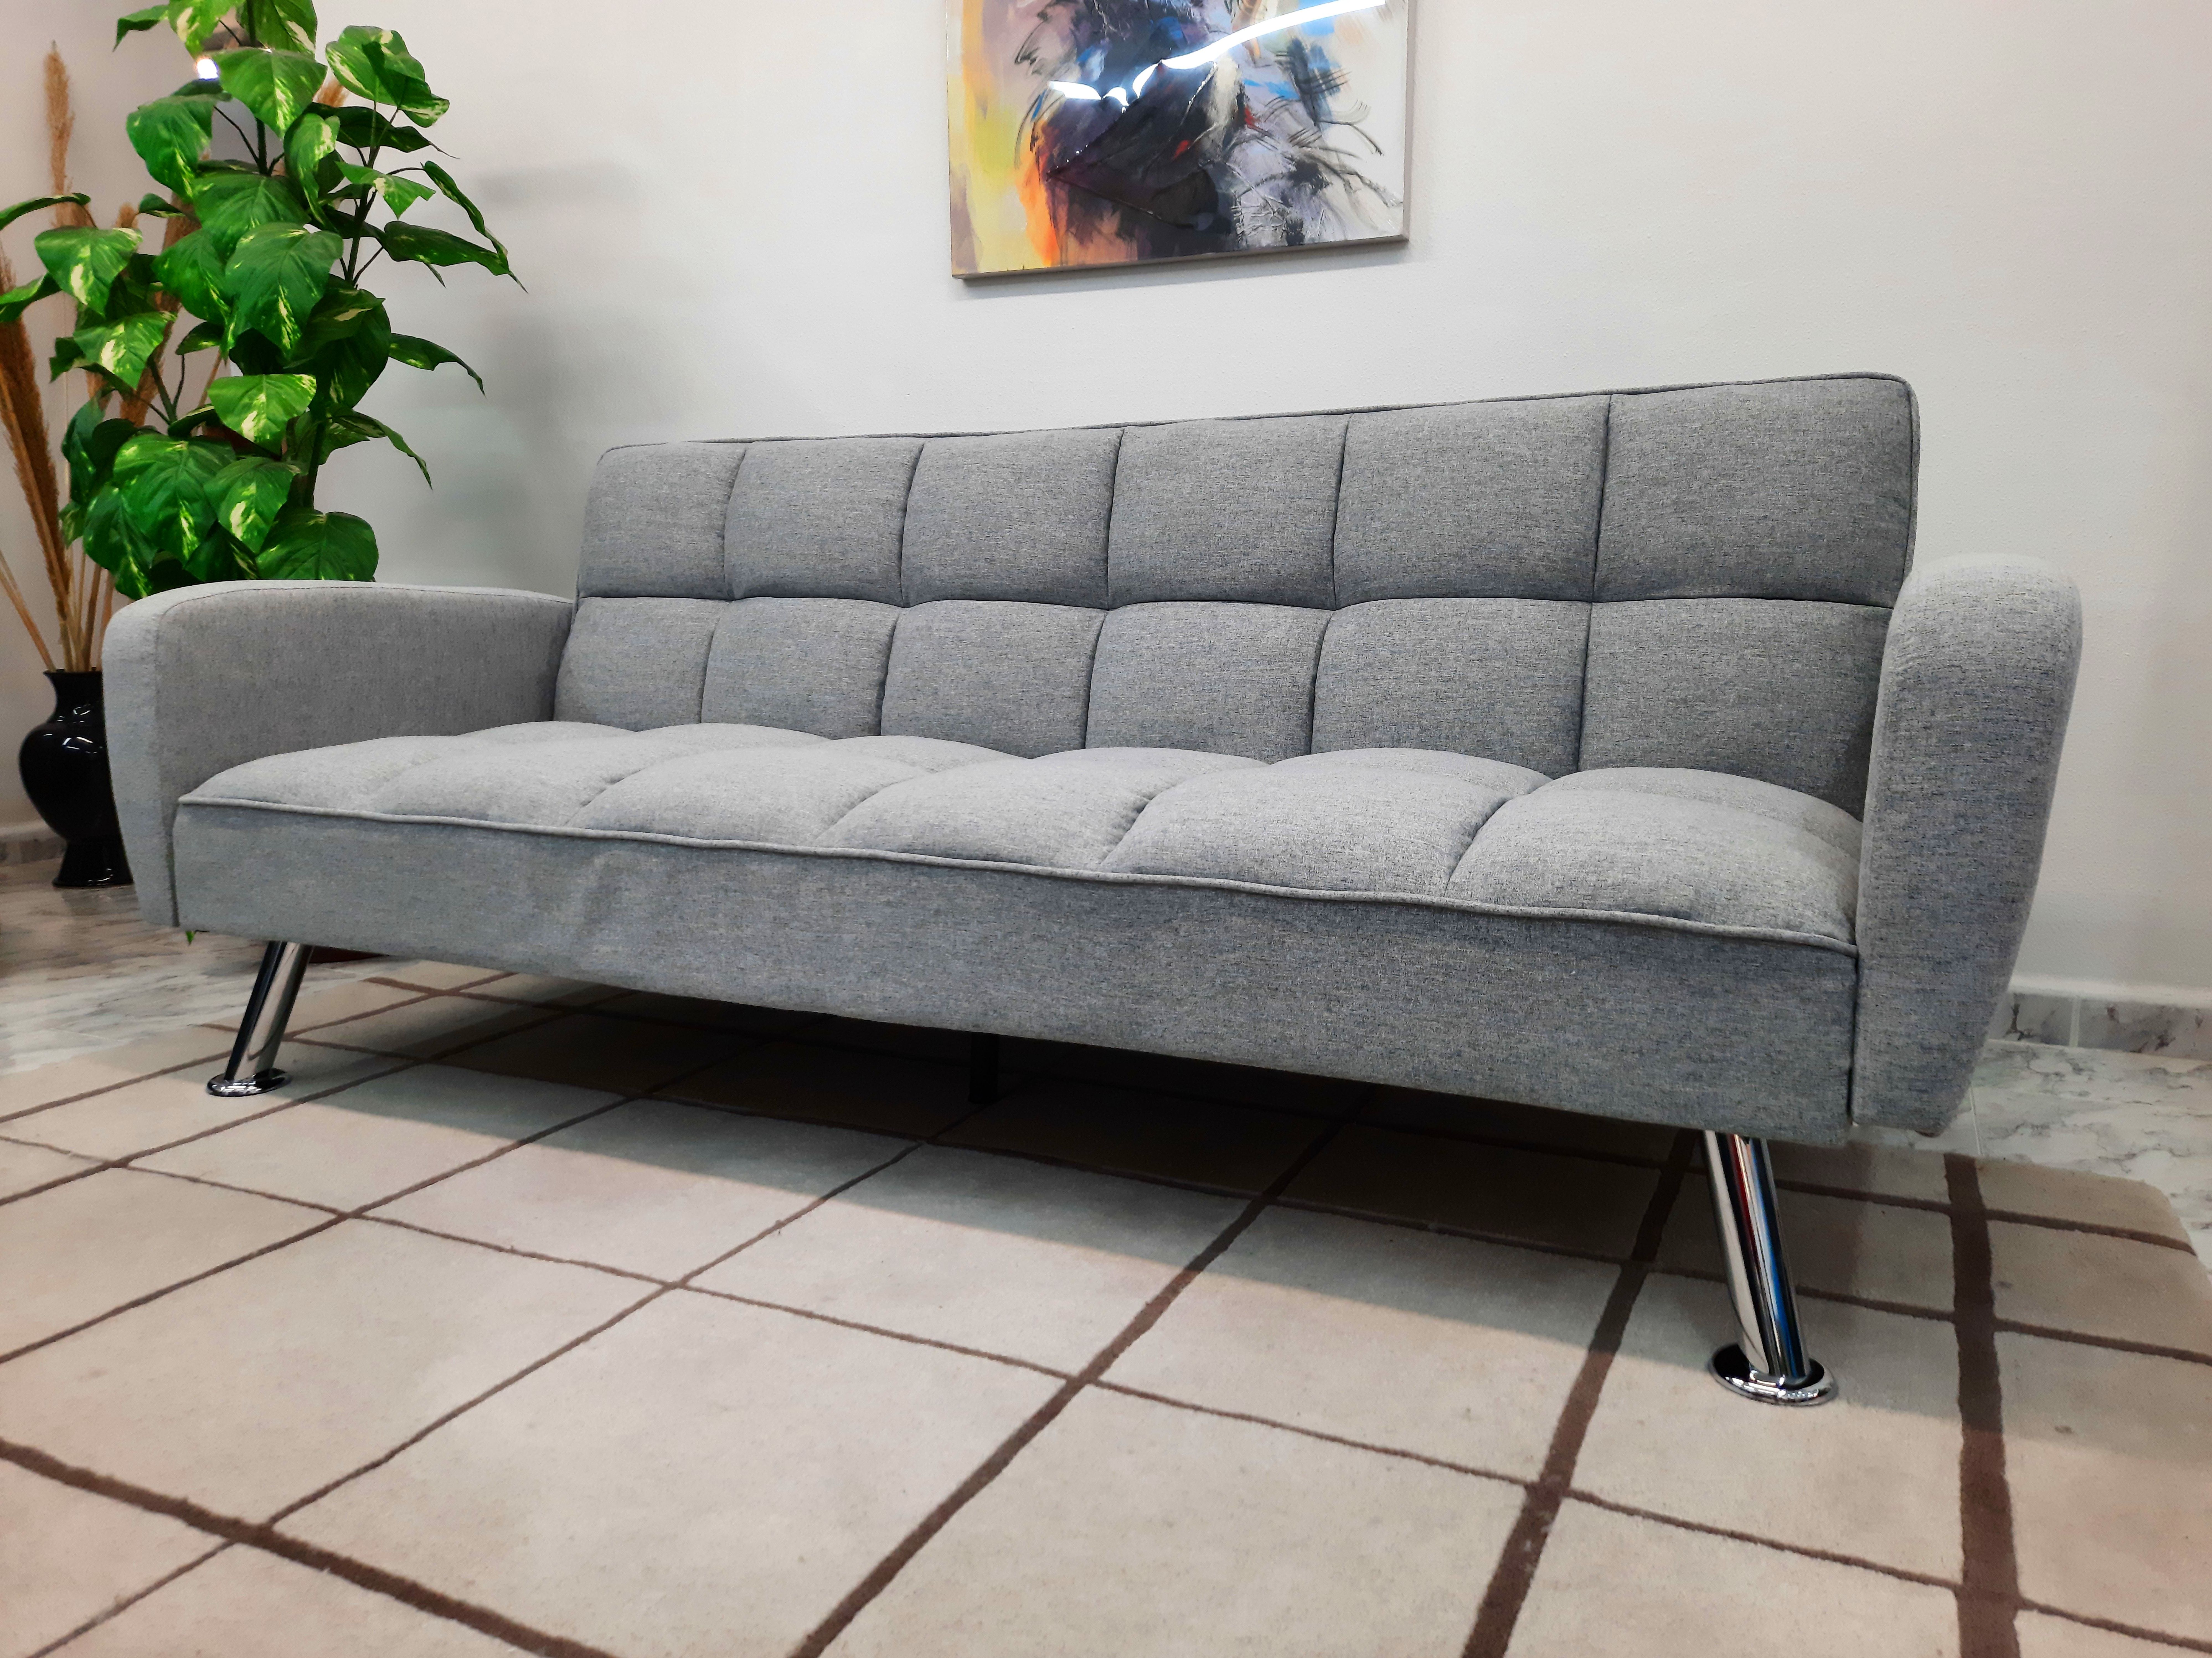 Sofa cama new karluz en tela